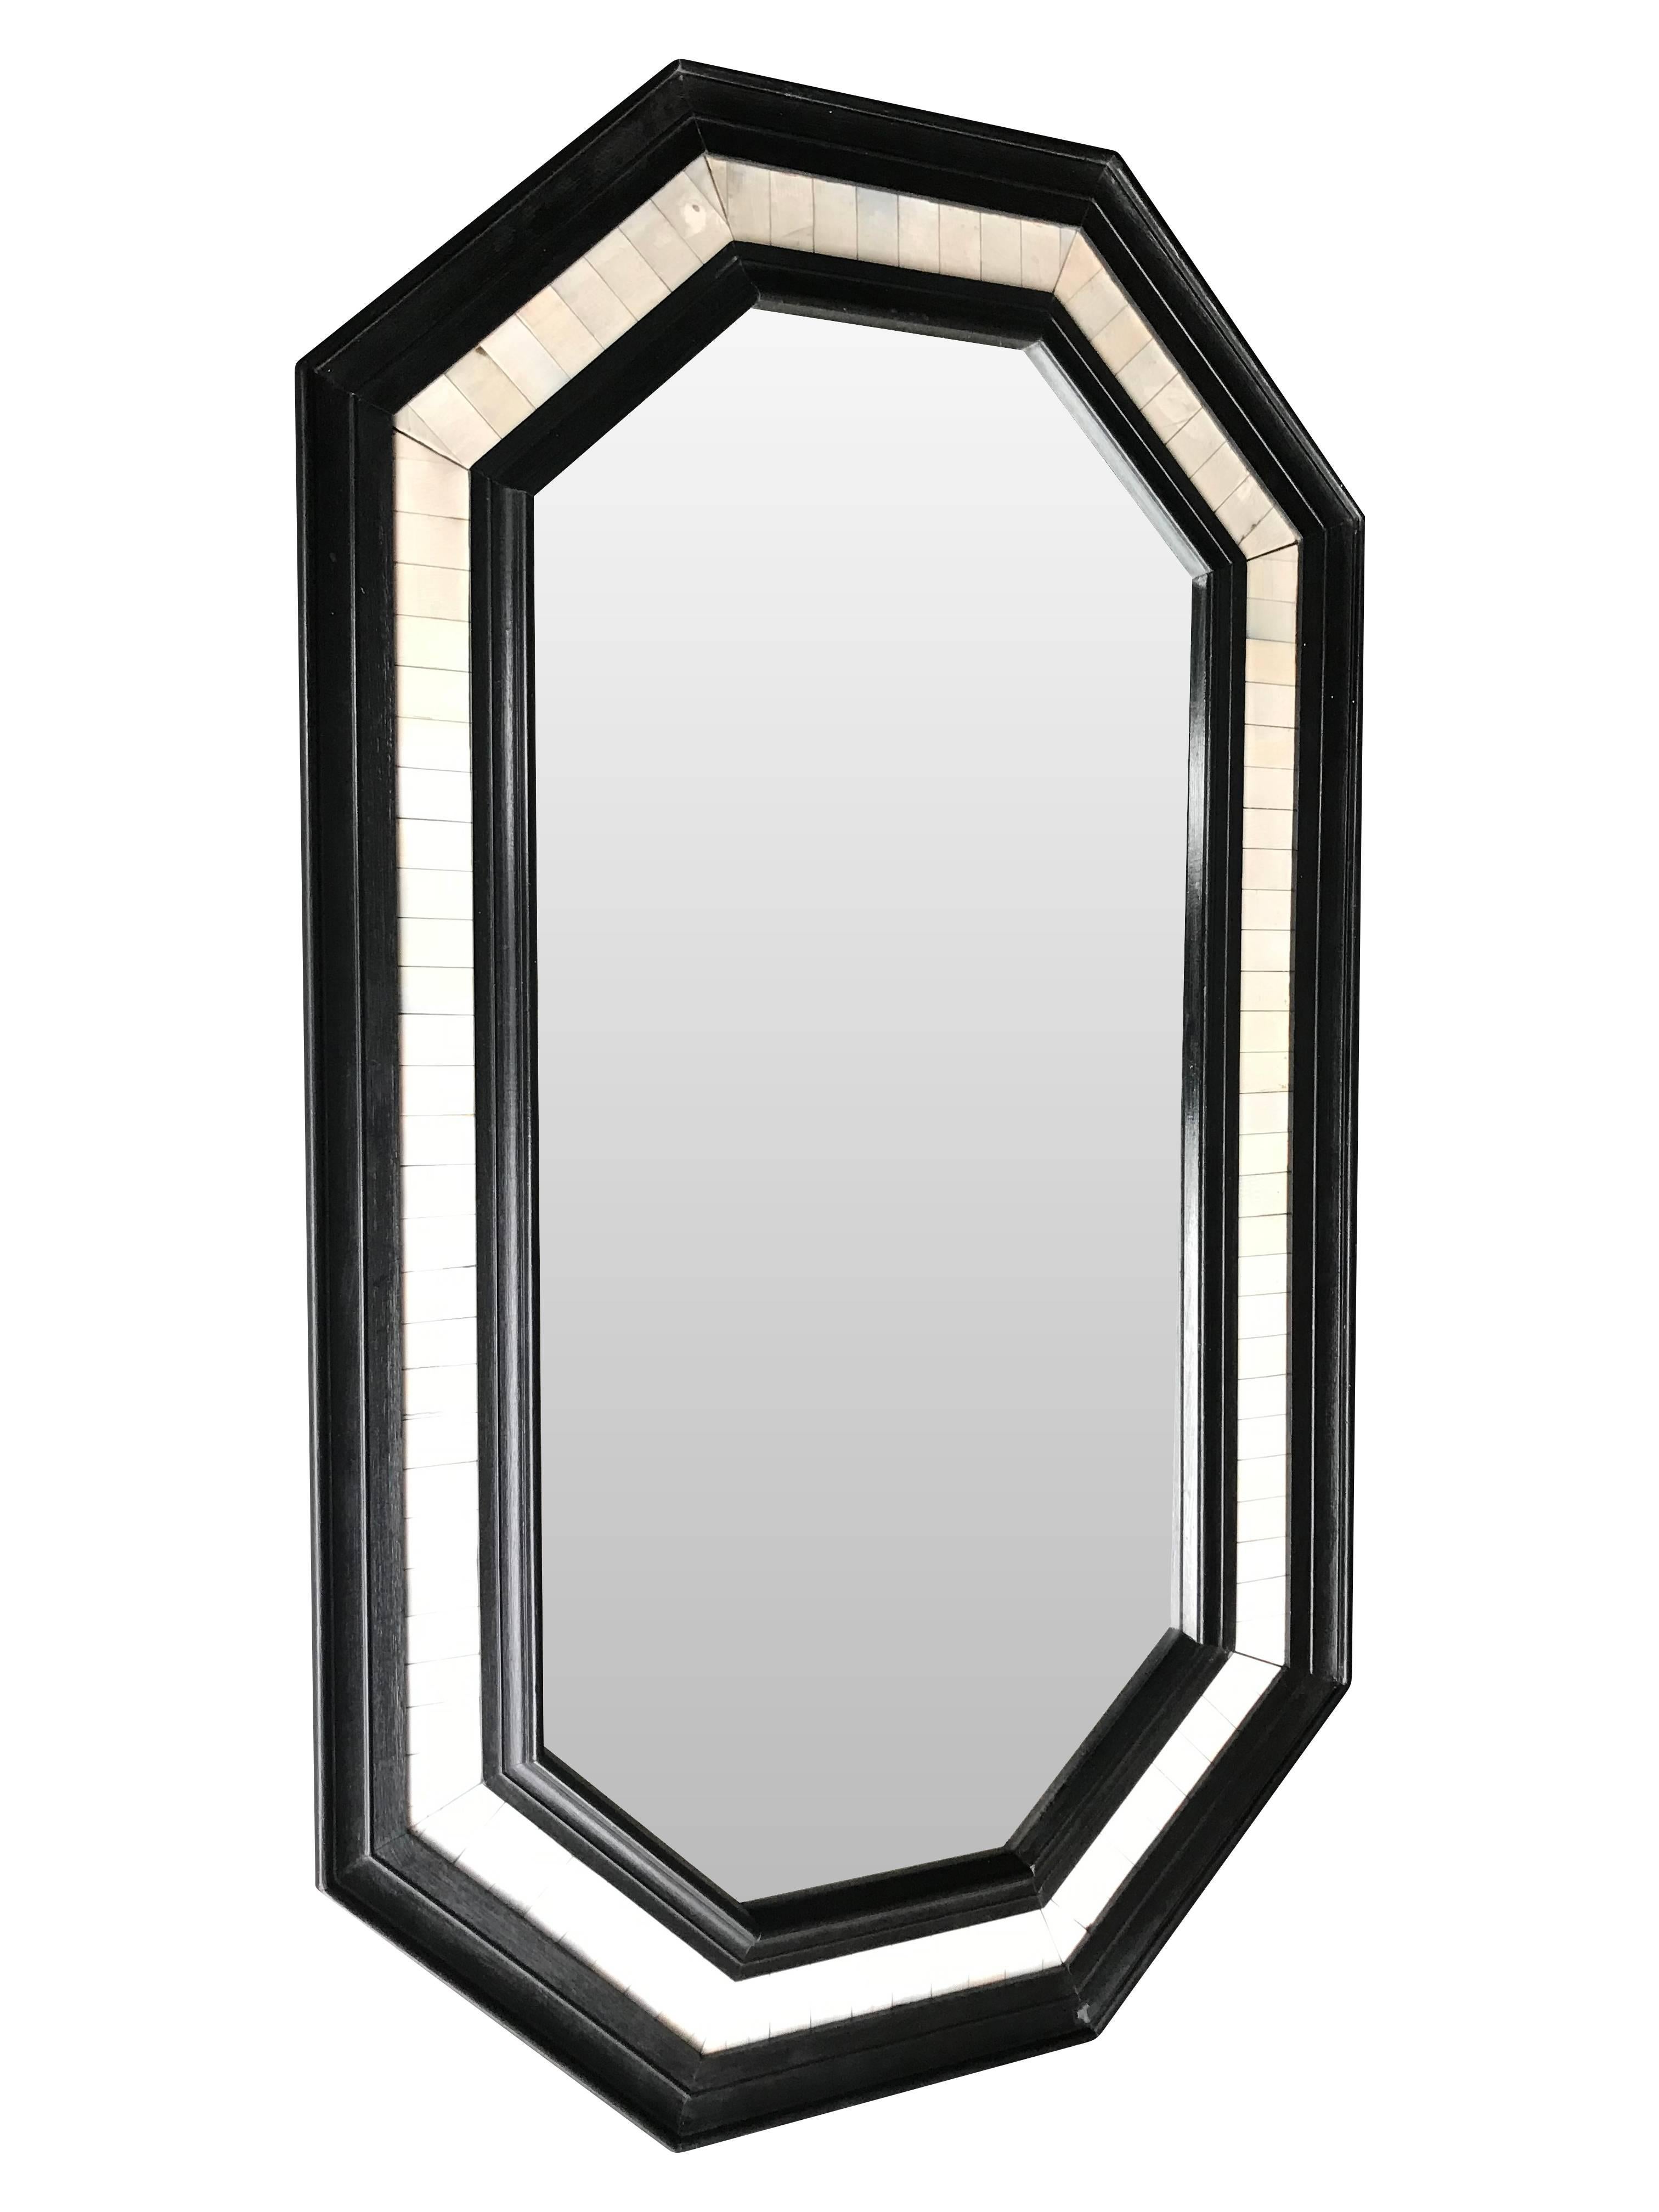 Octagonal Ebonized Wooden Framed Mirror with Bone Inlay Surround 2